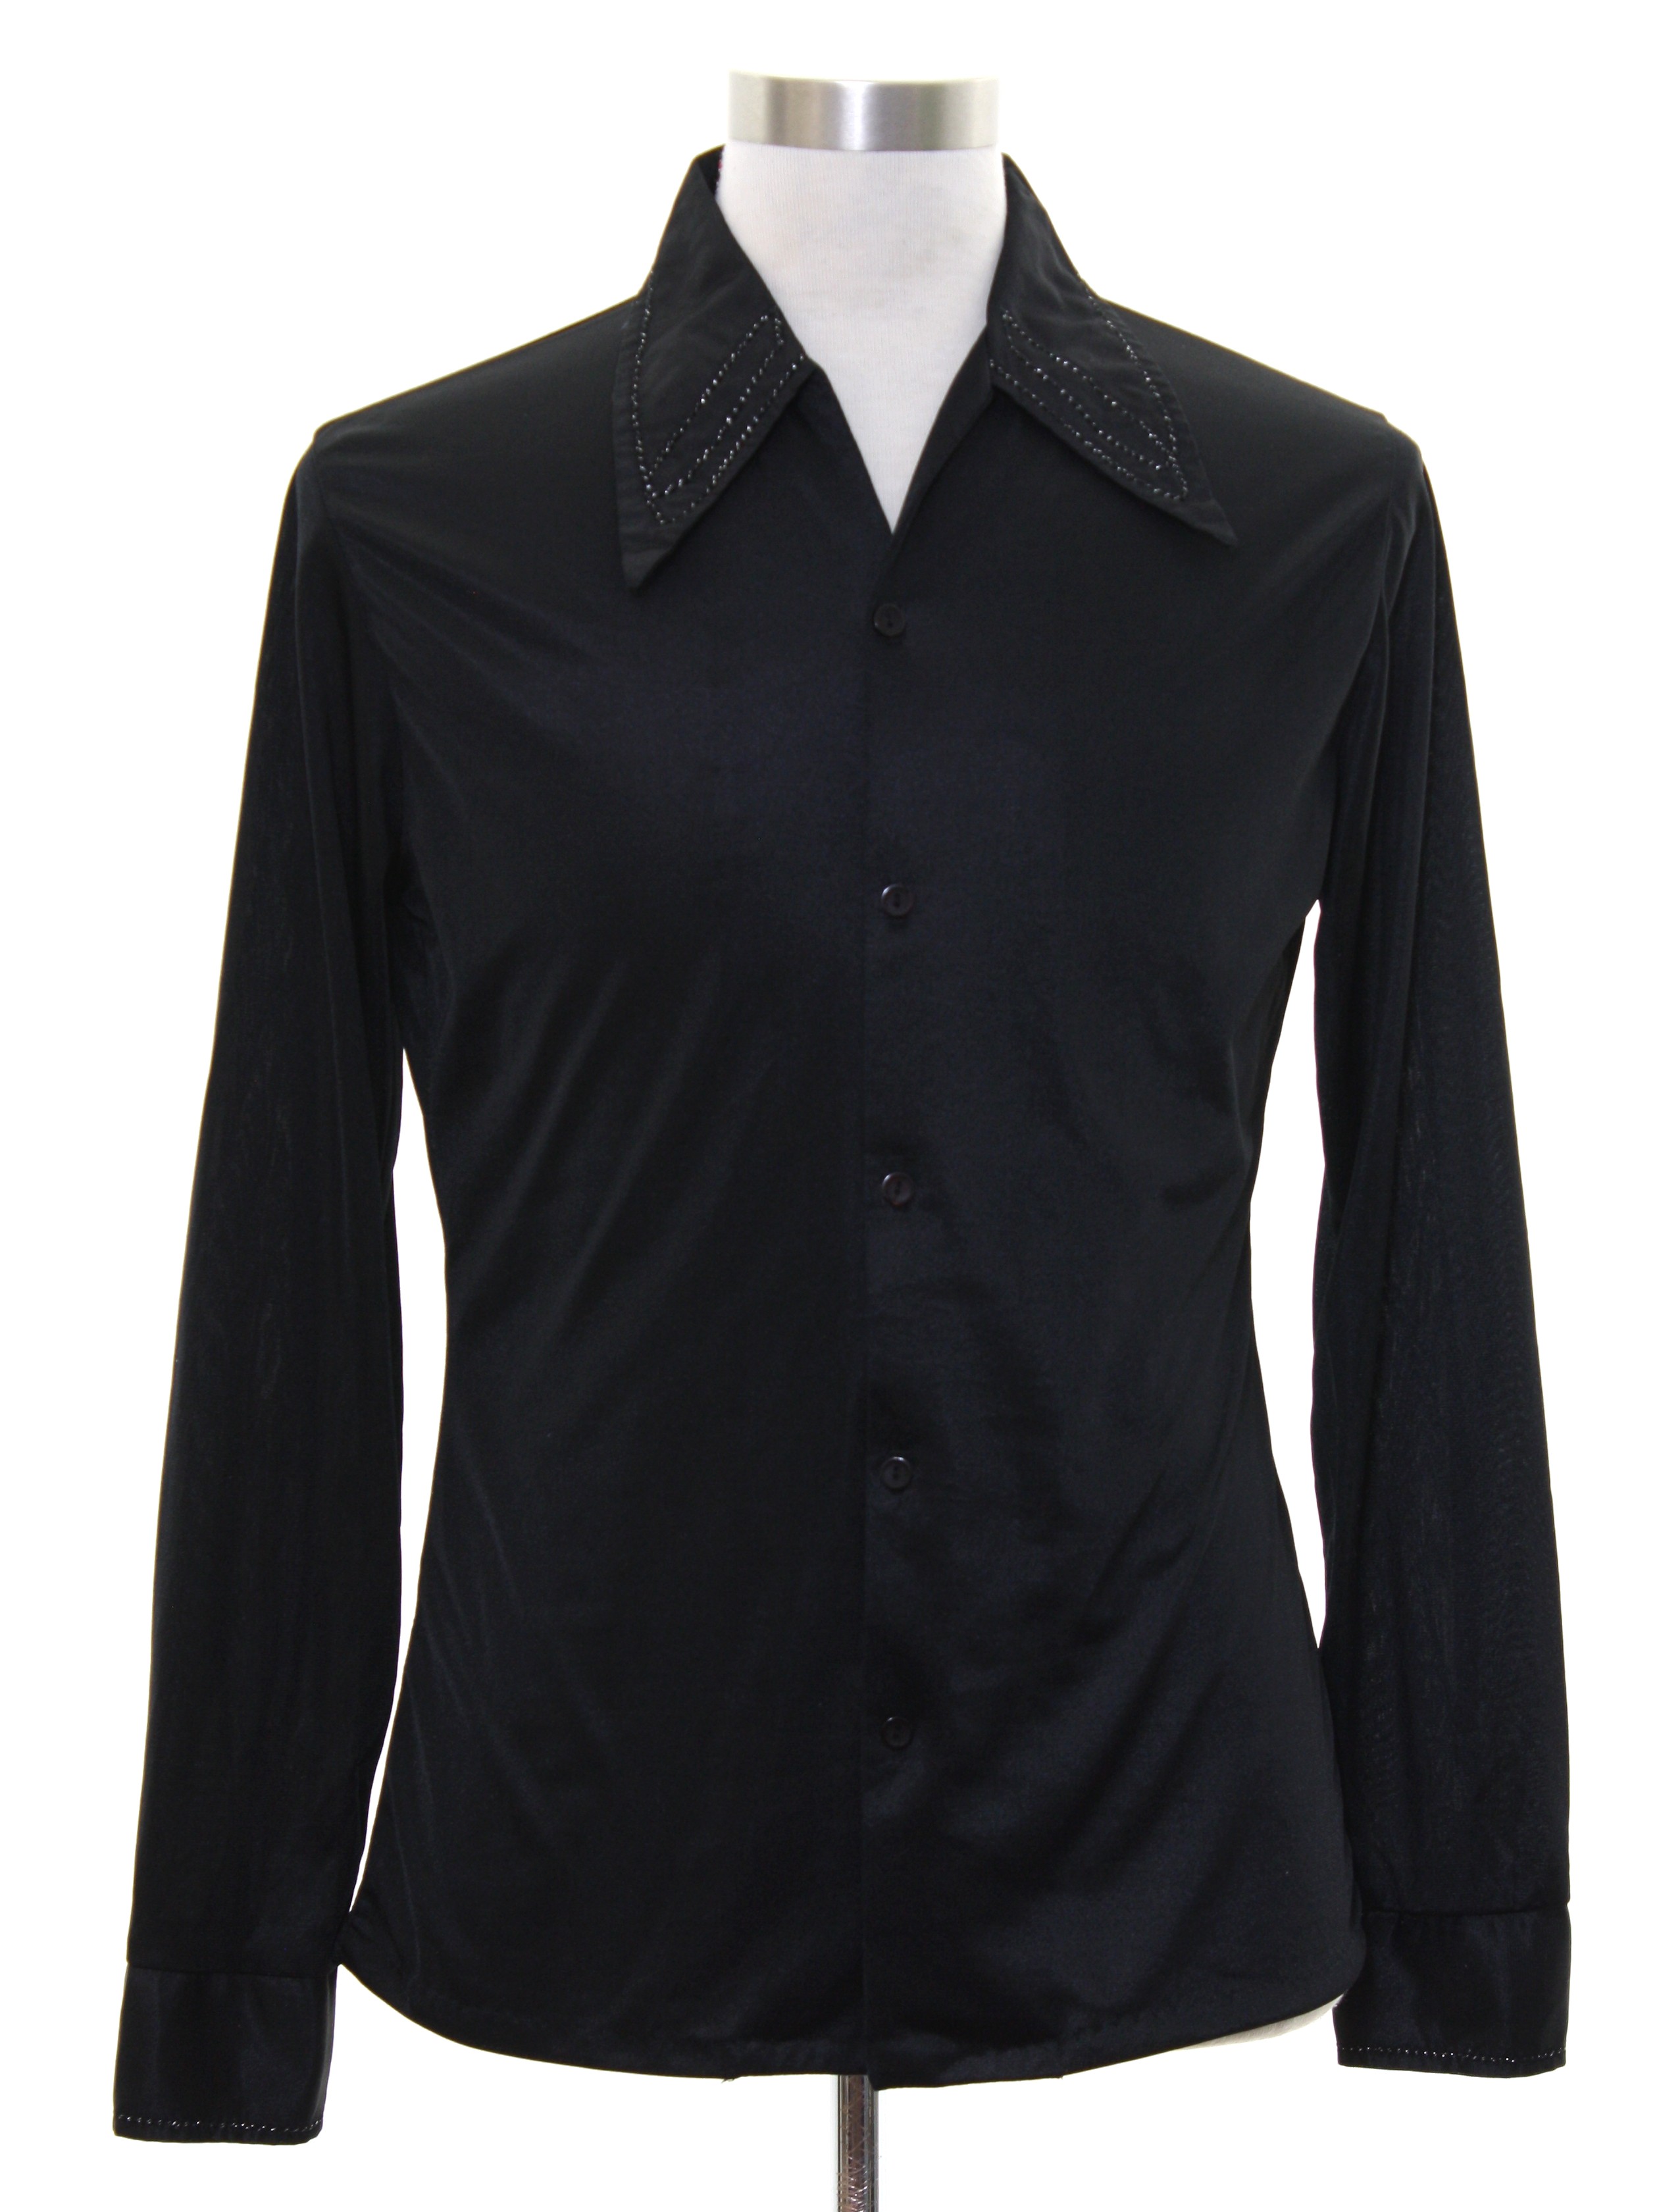 70s Retro Disco Shirt: 70s -Gallery Ltd.- Mens black background with ...